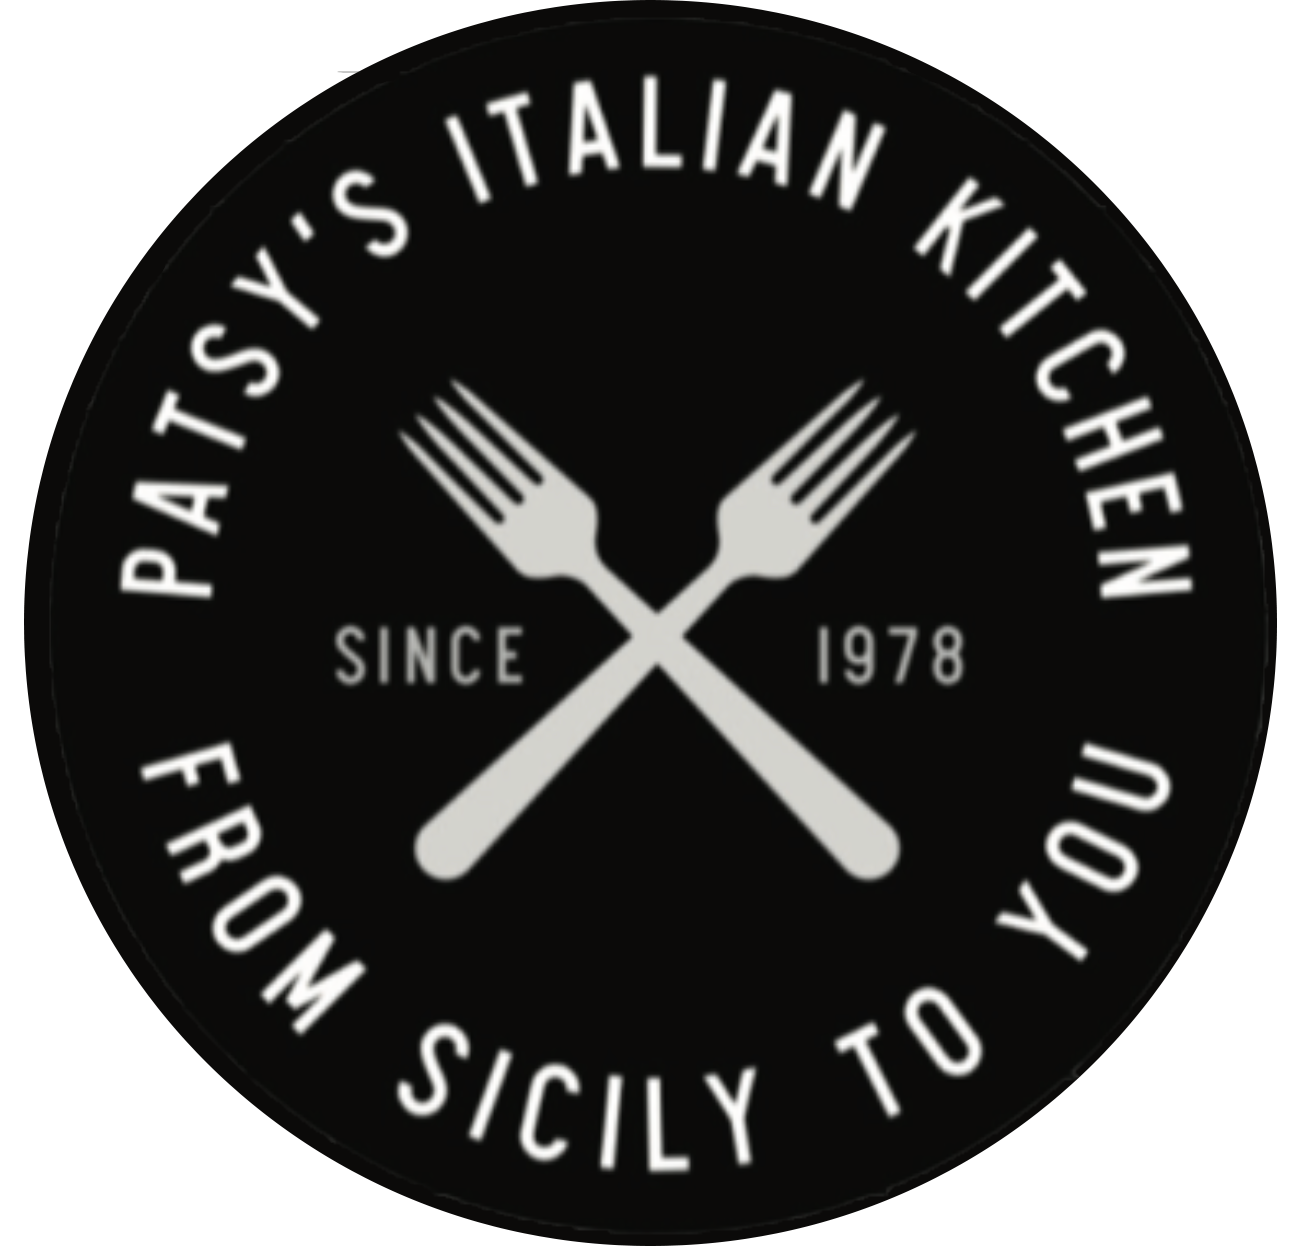 Patsy's Italian Kitchen Menu